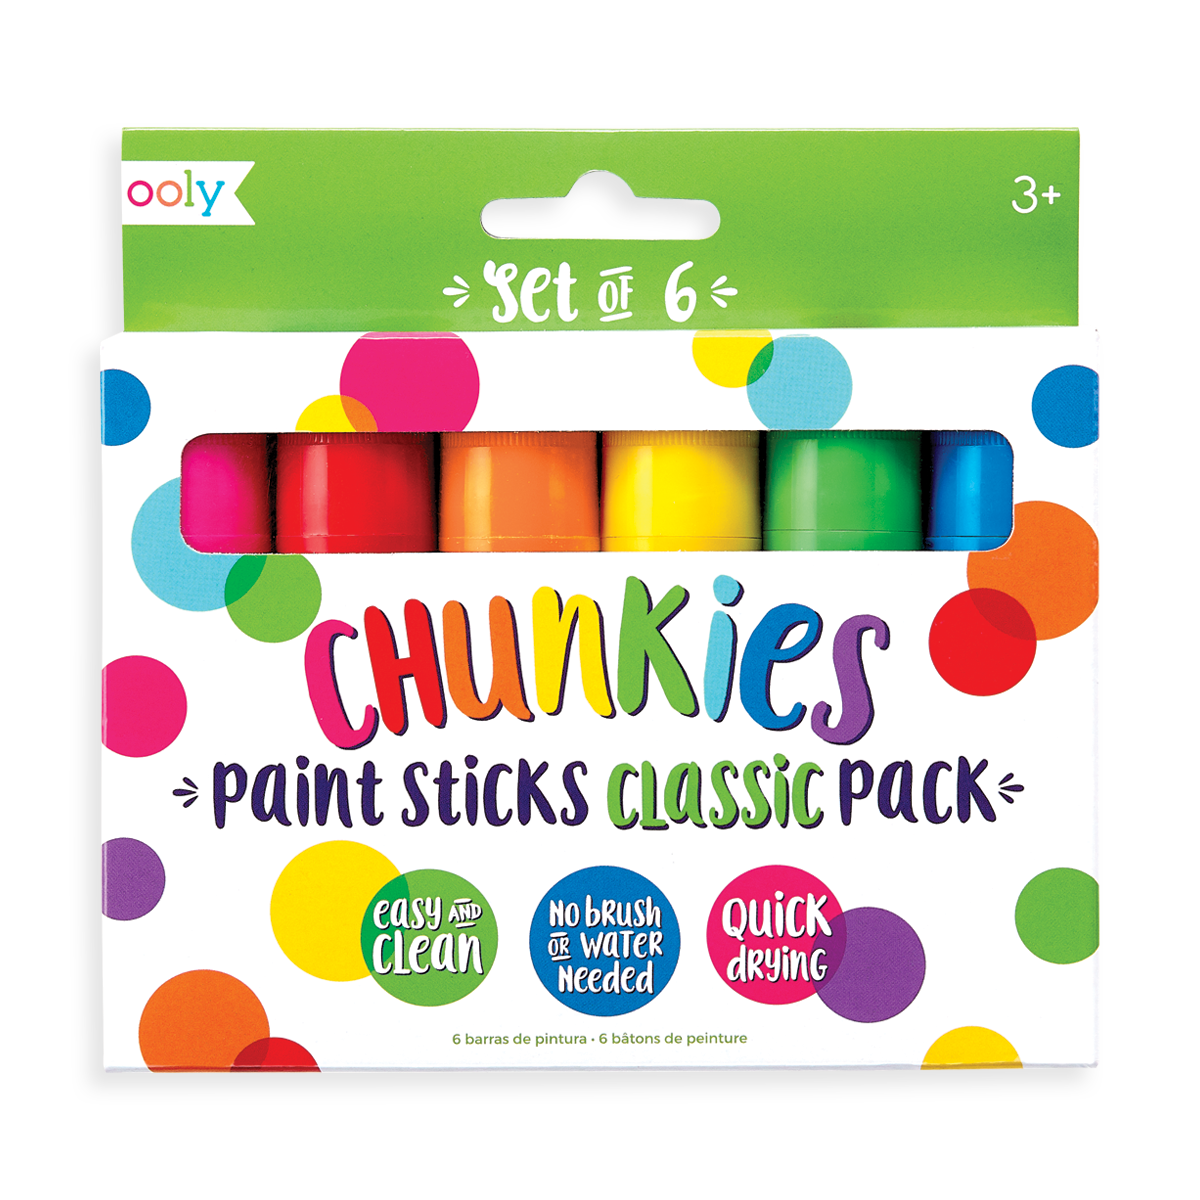 Chunkies Paint Sticks – OK the store